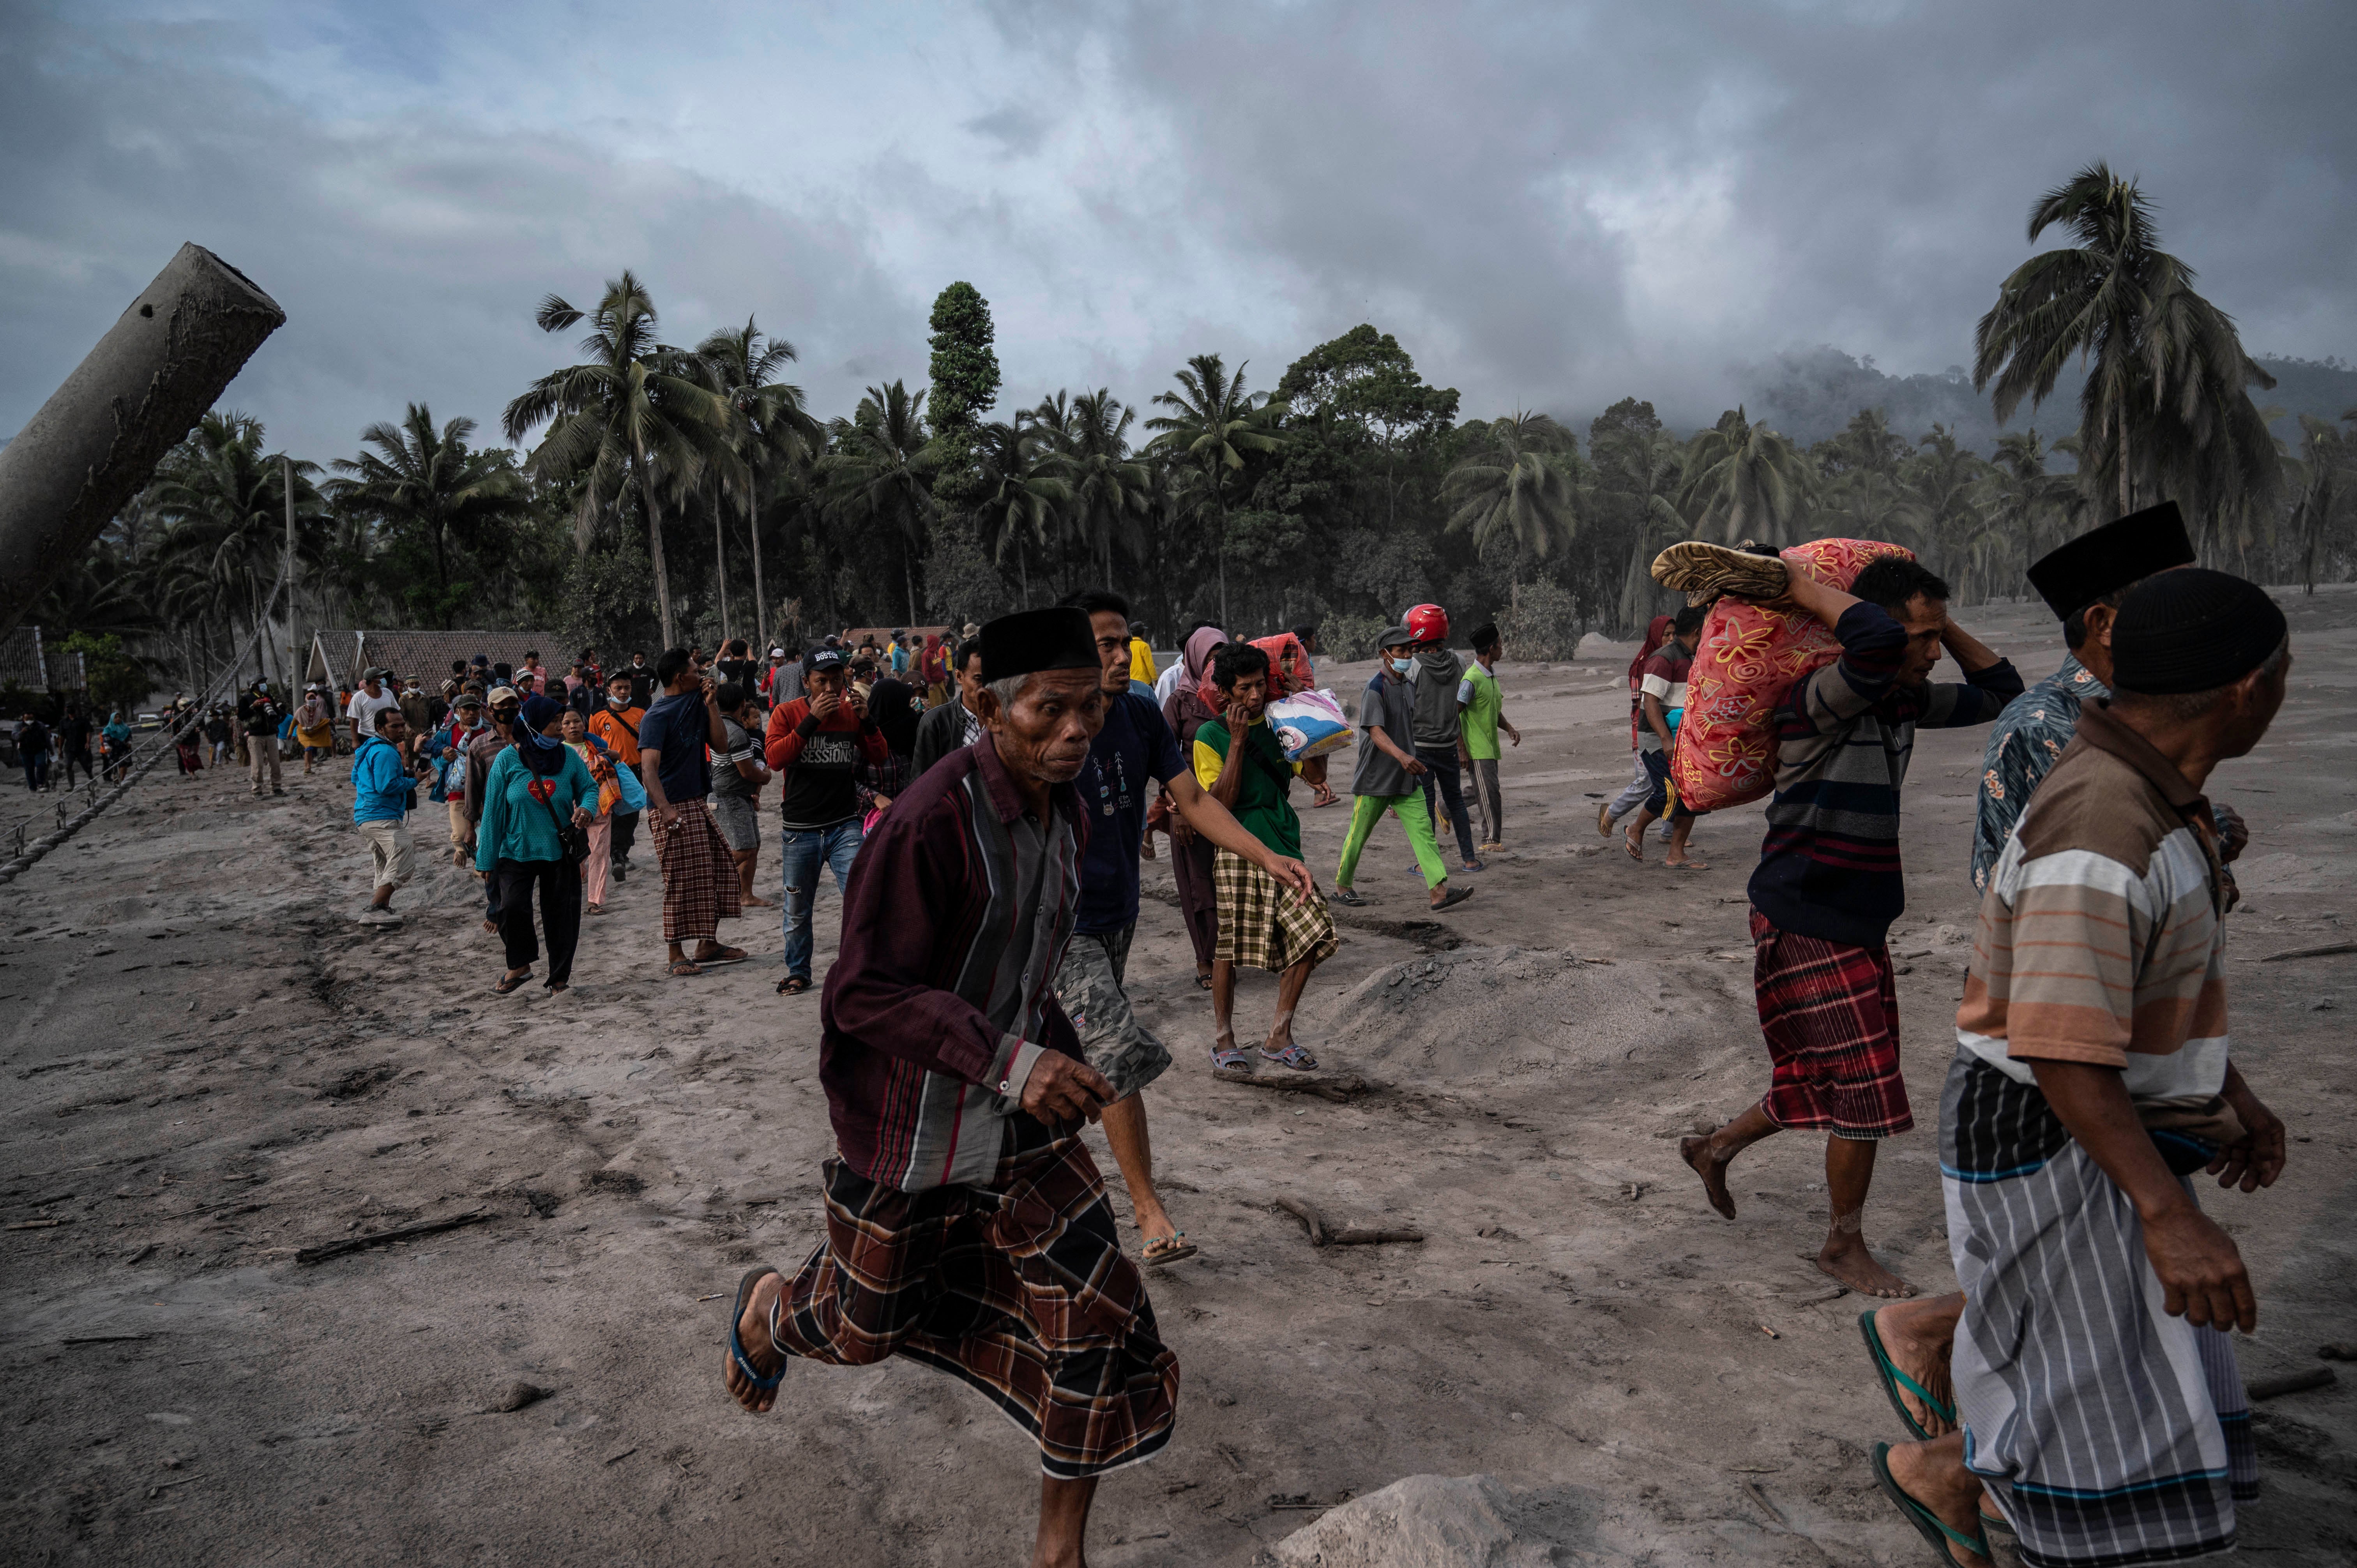 Indonesia Mount Semeru volcano eruption kills 14 as thousands flee The Independent